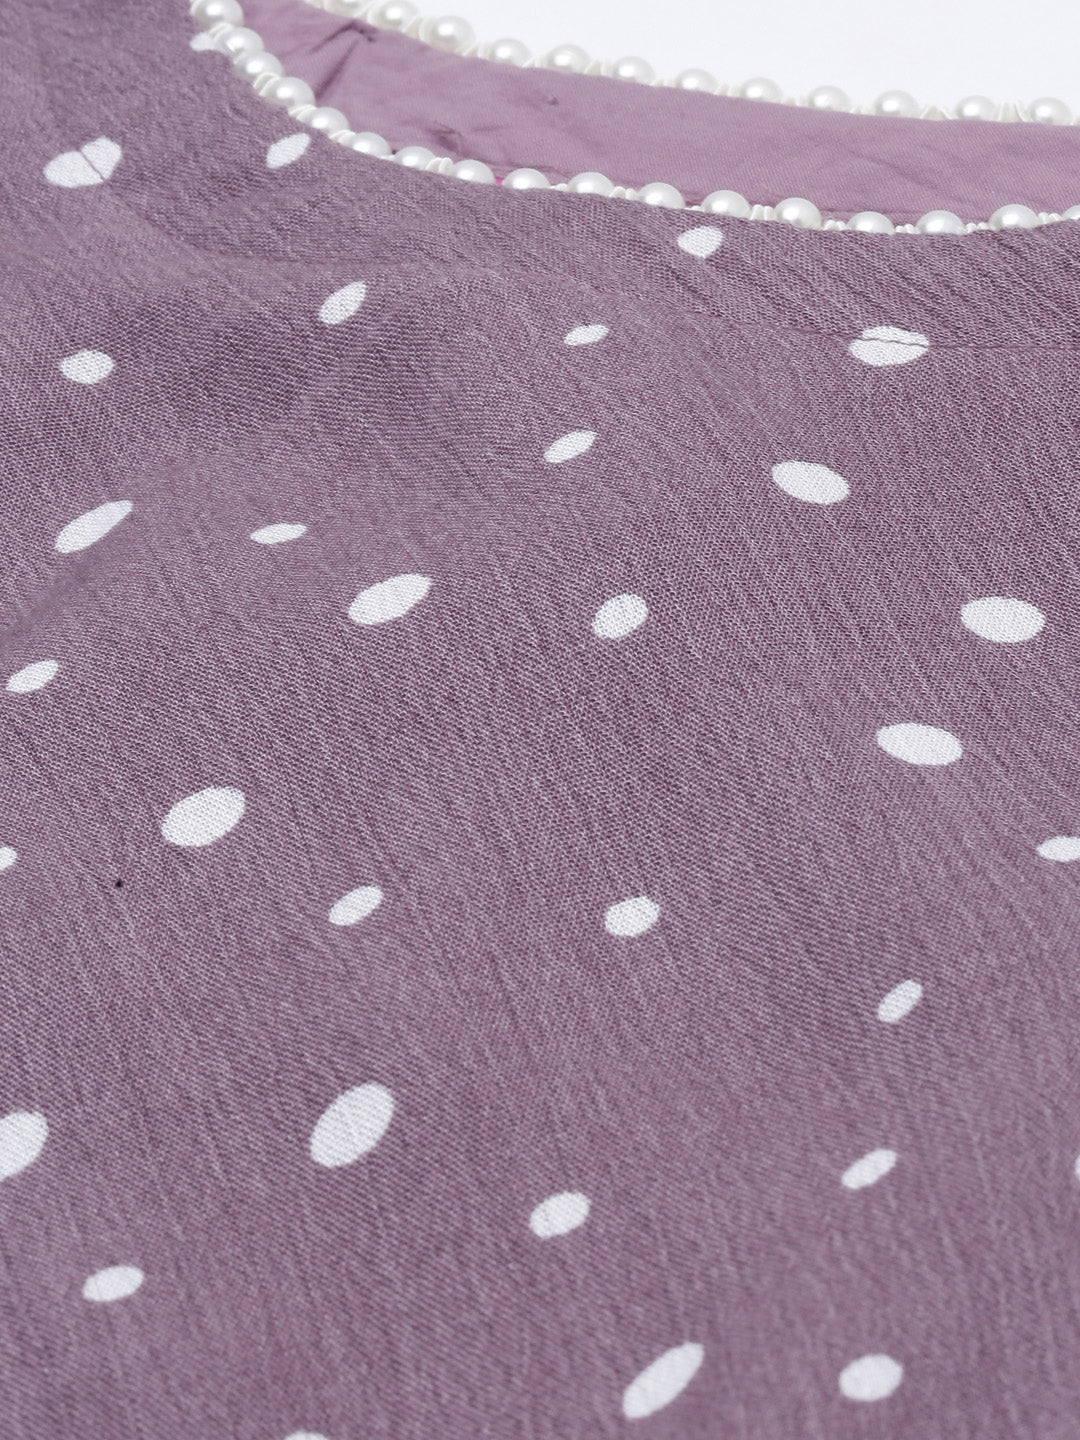 Neeru's Lavender Color Chiffon Fabric Tunic